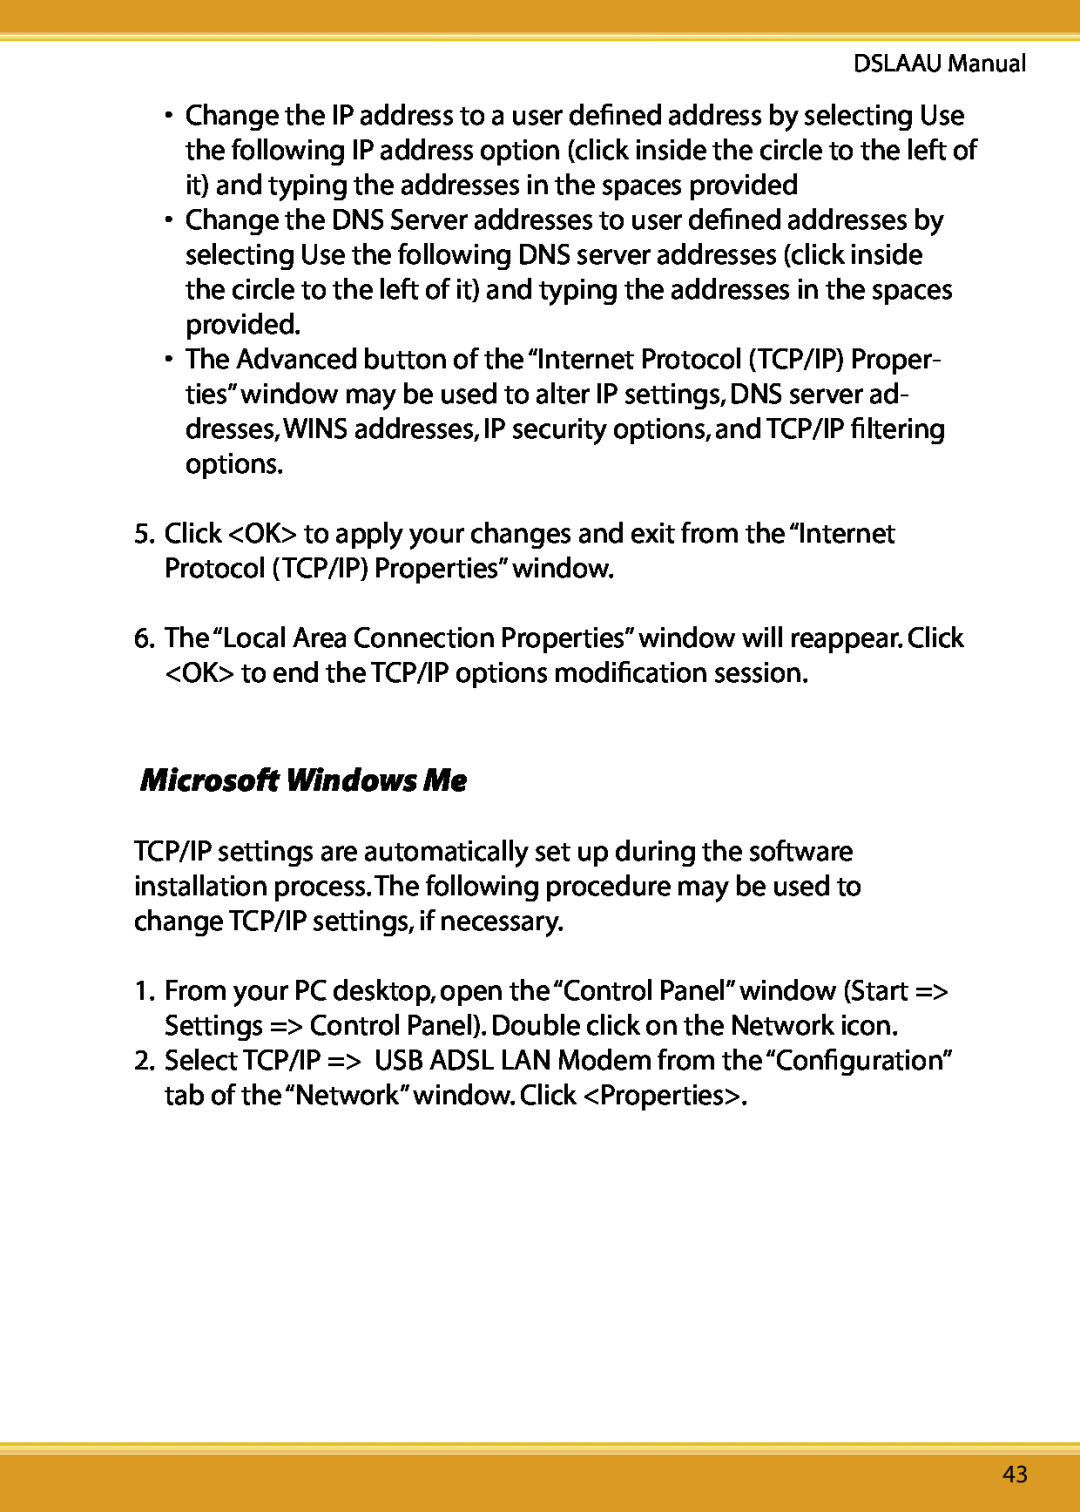 Corega user manual Microsoft Windows Me, DSLAAU Manual 